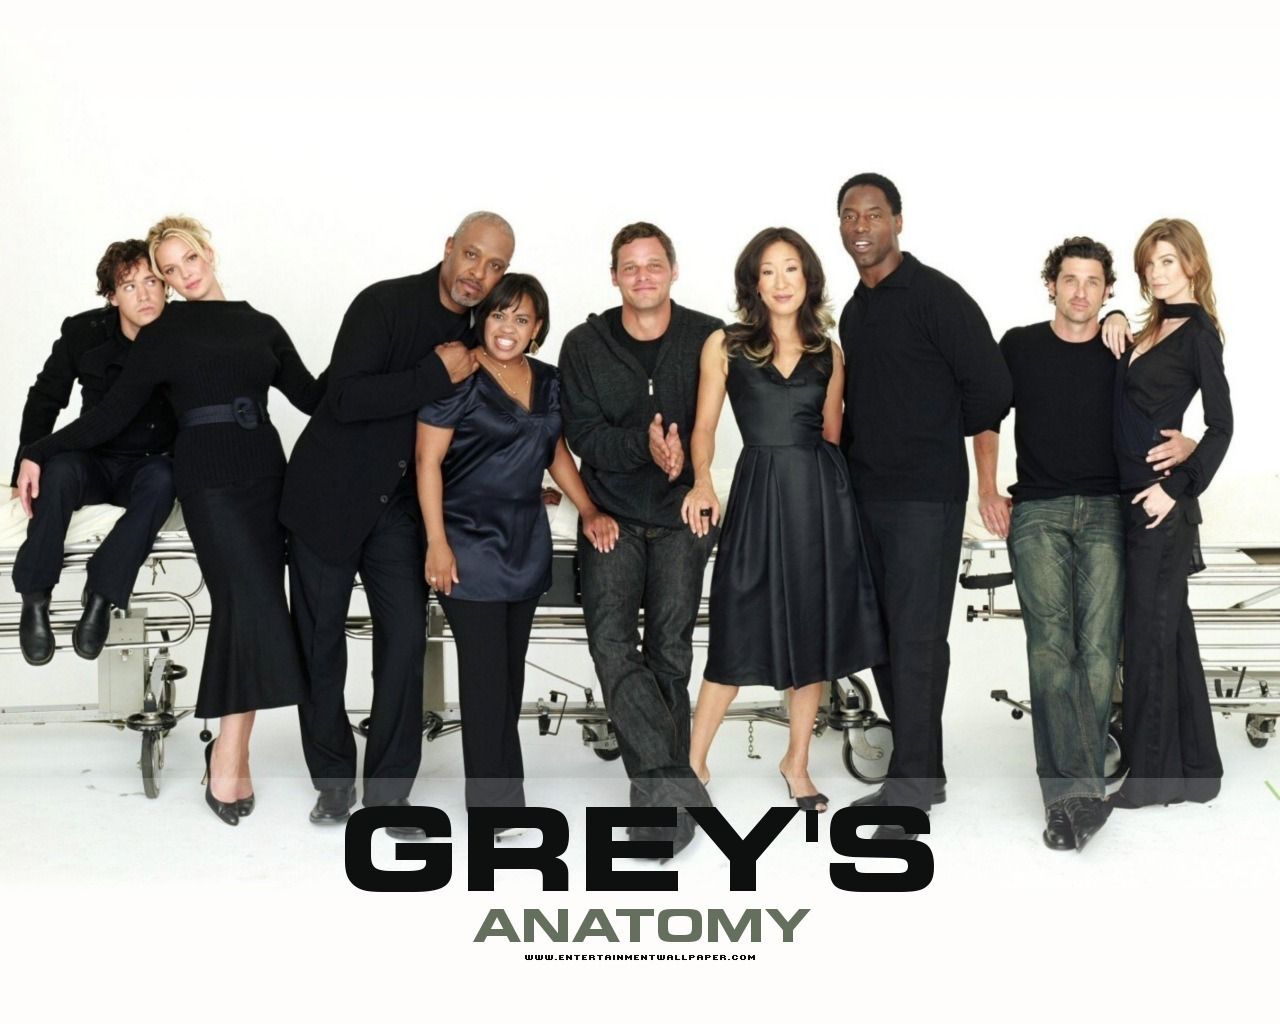 Greys Anatomy. Greys anatomy cast, Greys anatomy season, Watch